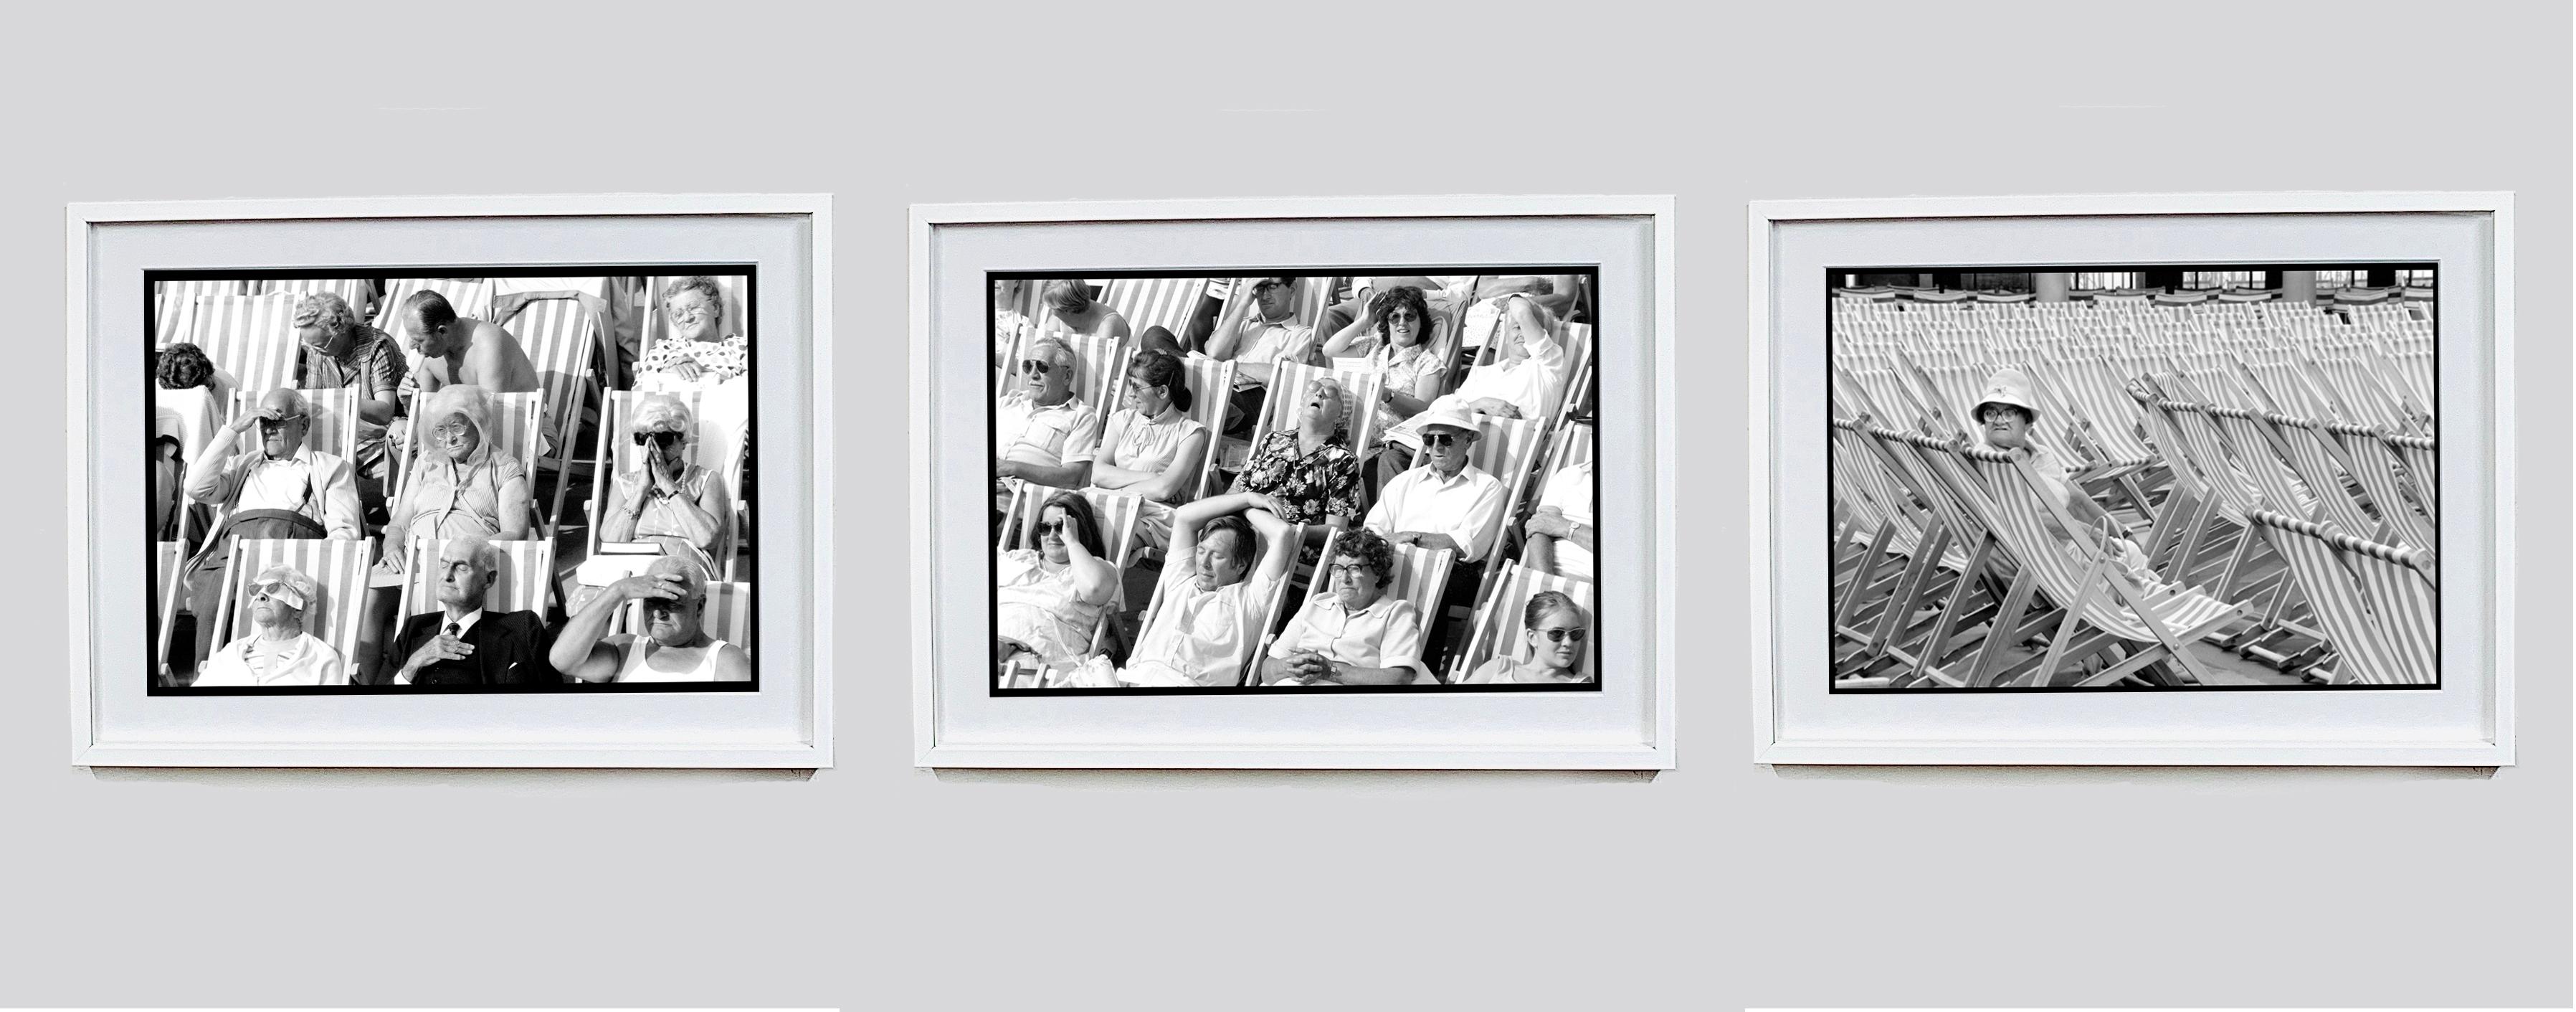 Bandstand II, Eastbourne, UK - Black and White Vintage Photography For Sale 1